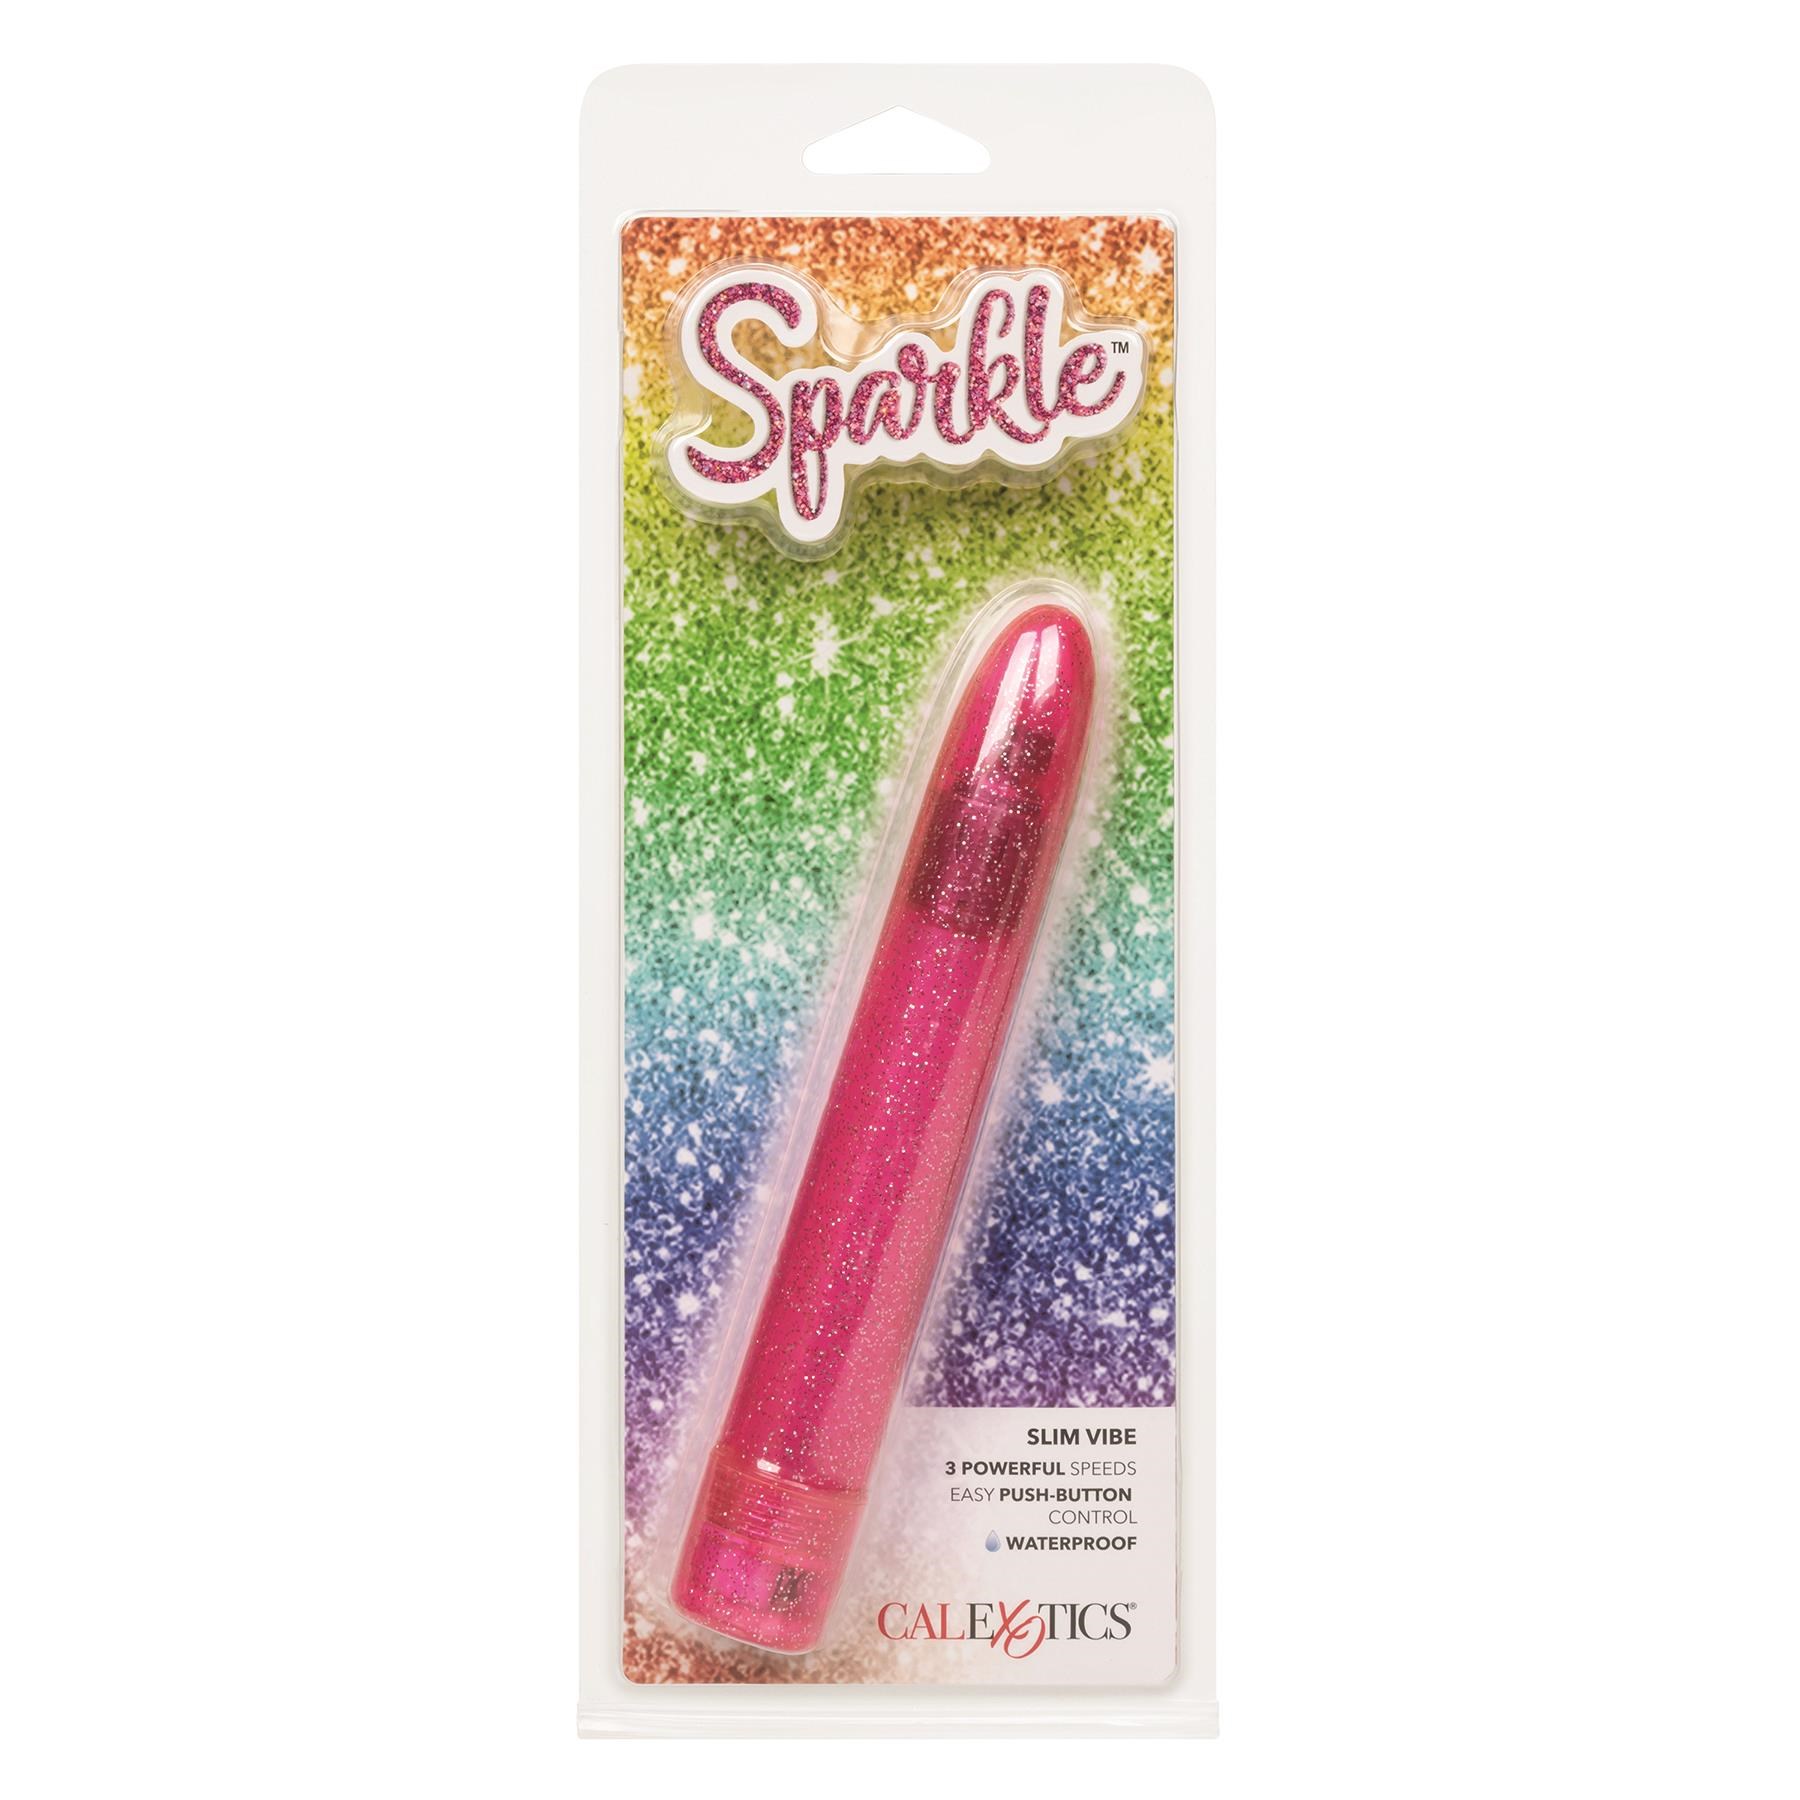 Sparkle Slim Vibrator - Packaging Shot